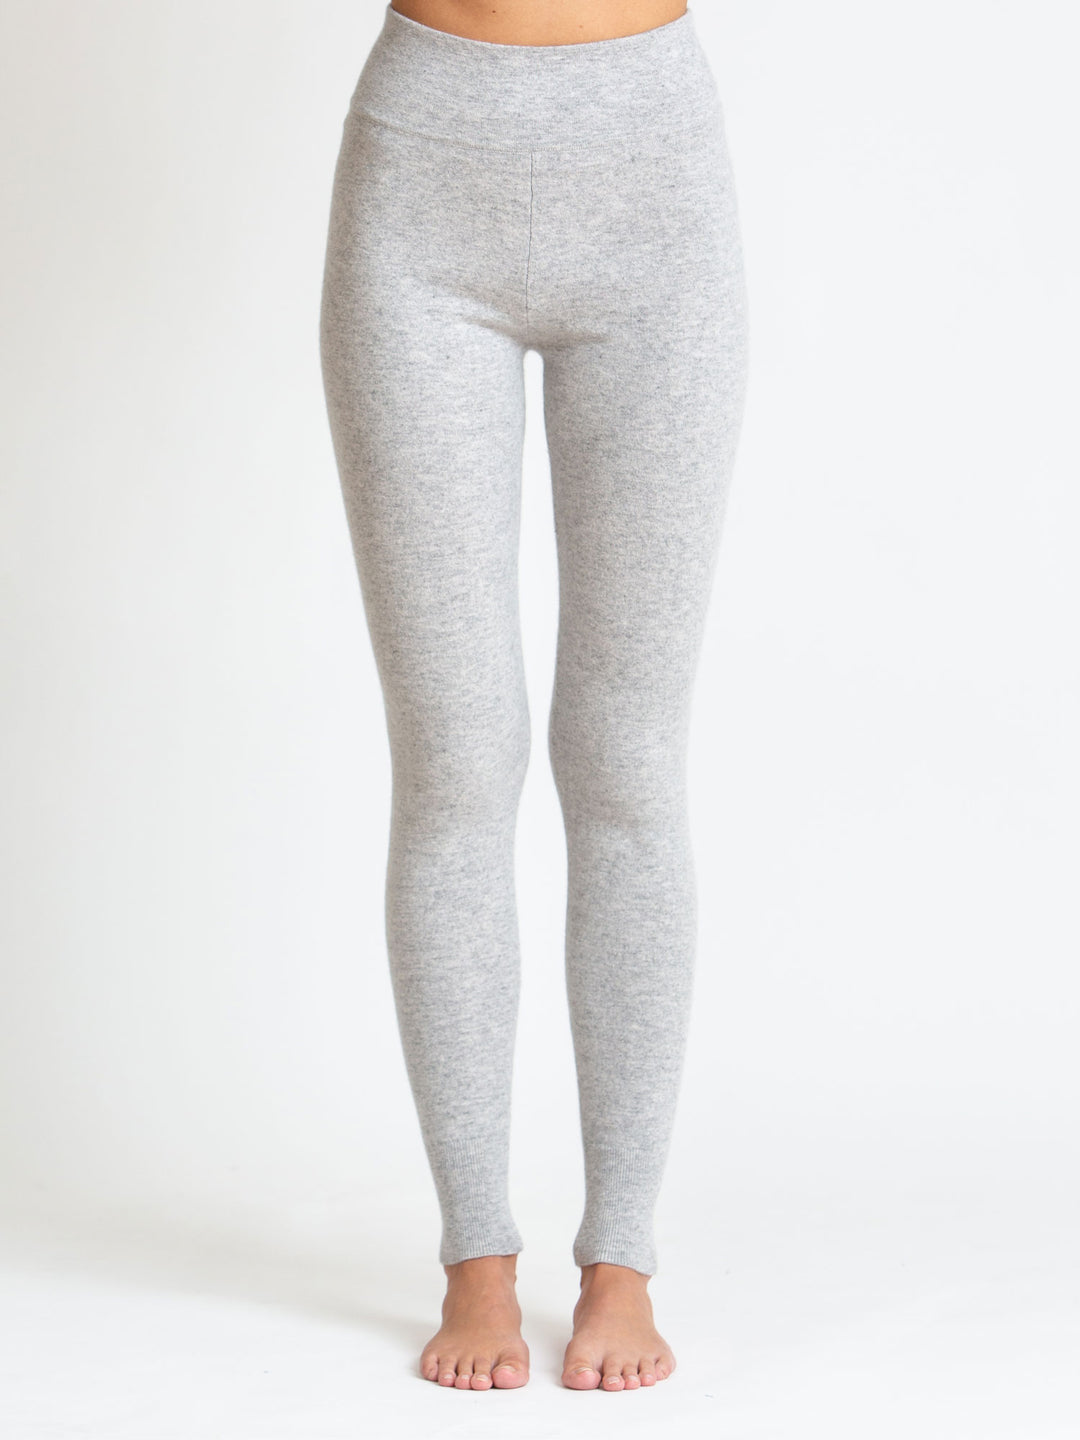 Cashmere pants "tights", 100% cashmere from Kashmina, color light grey